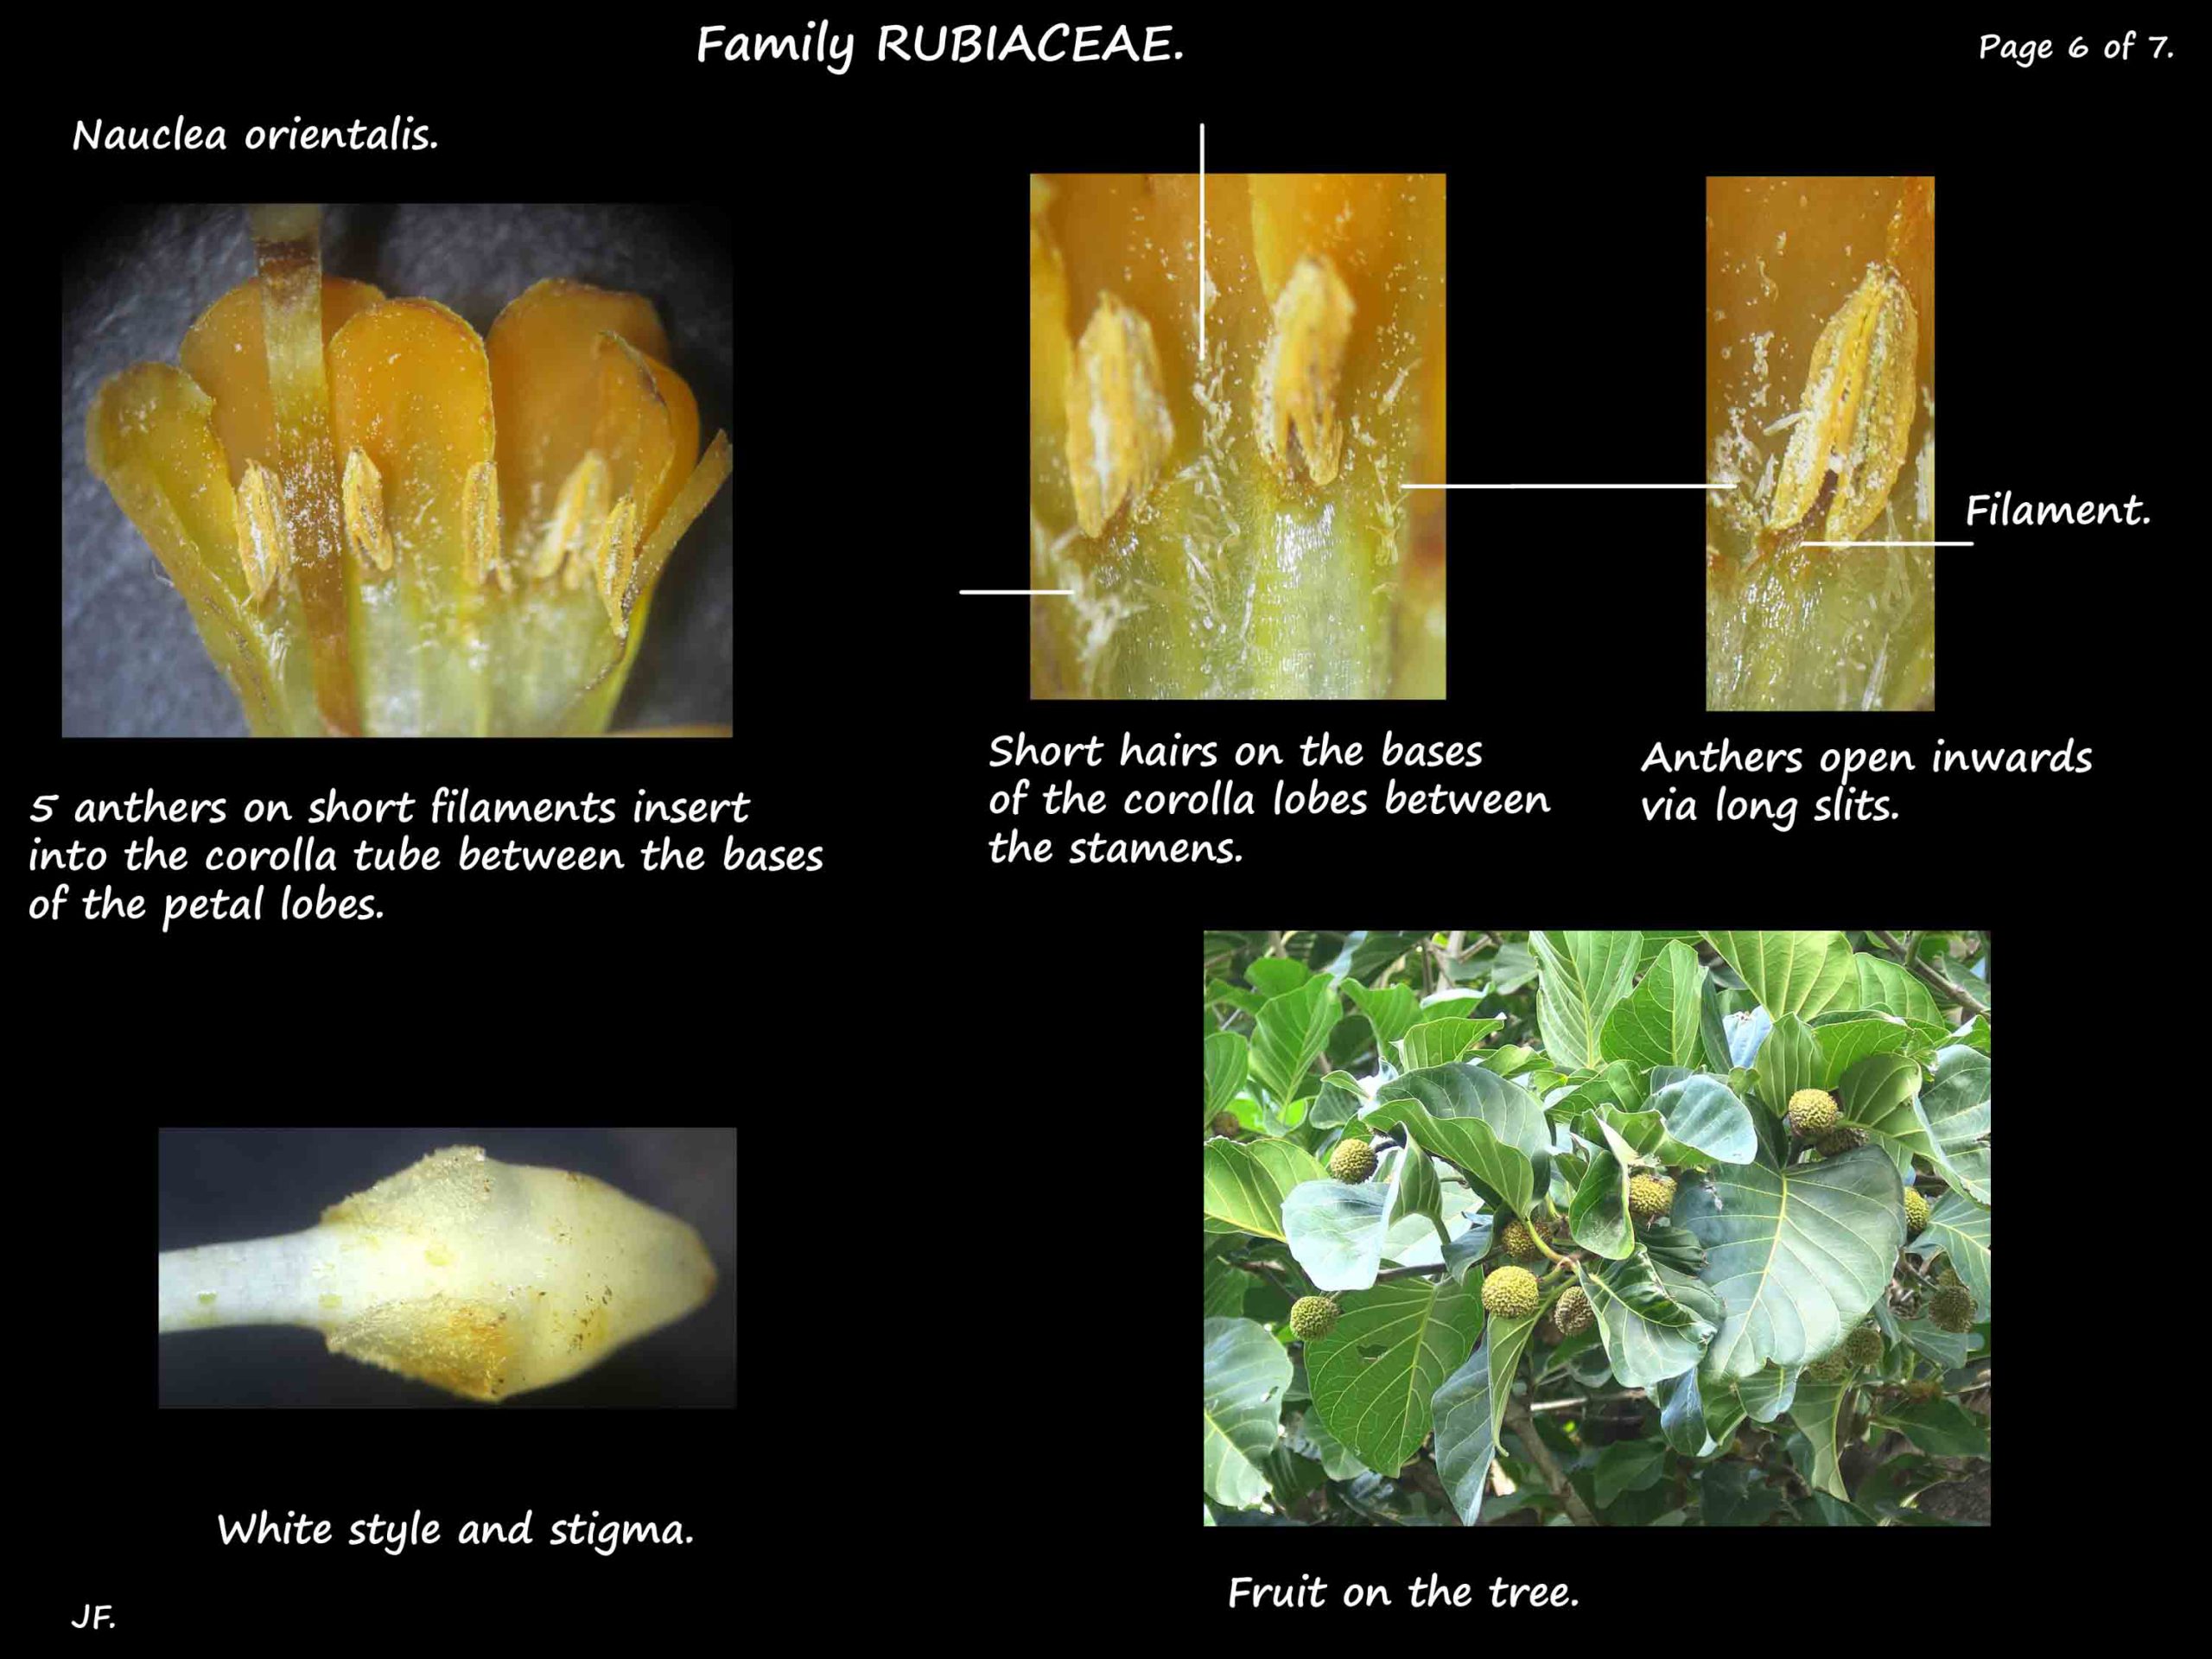 6 Nauclea orientalis stamens